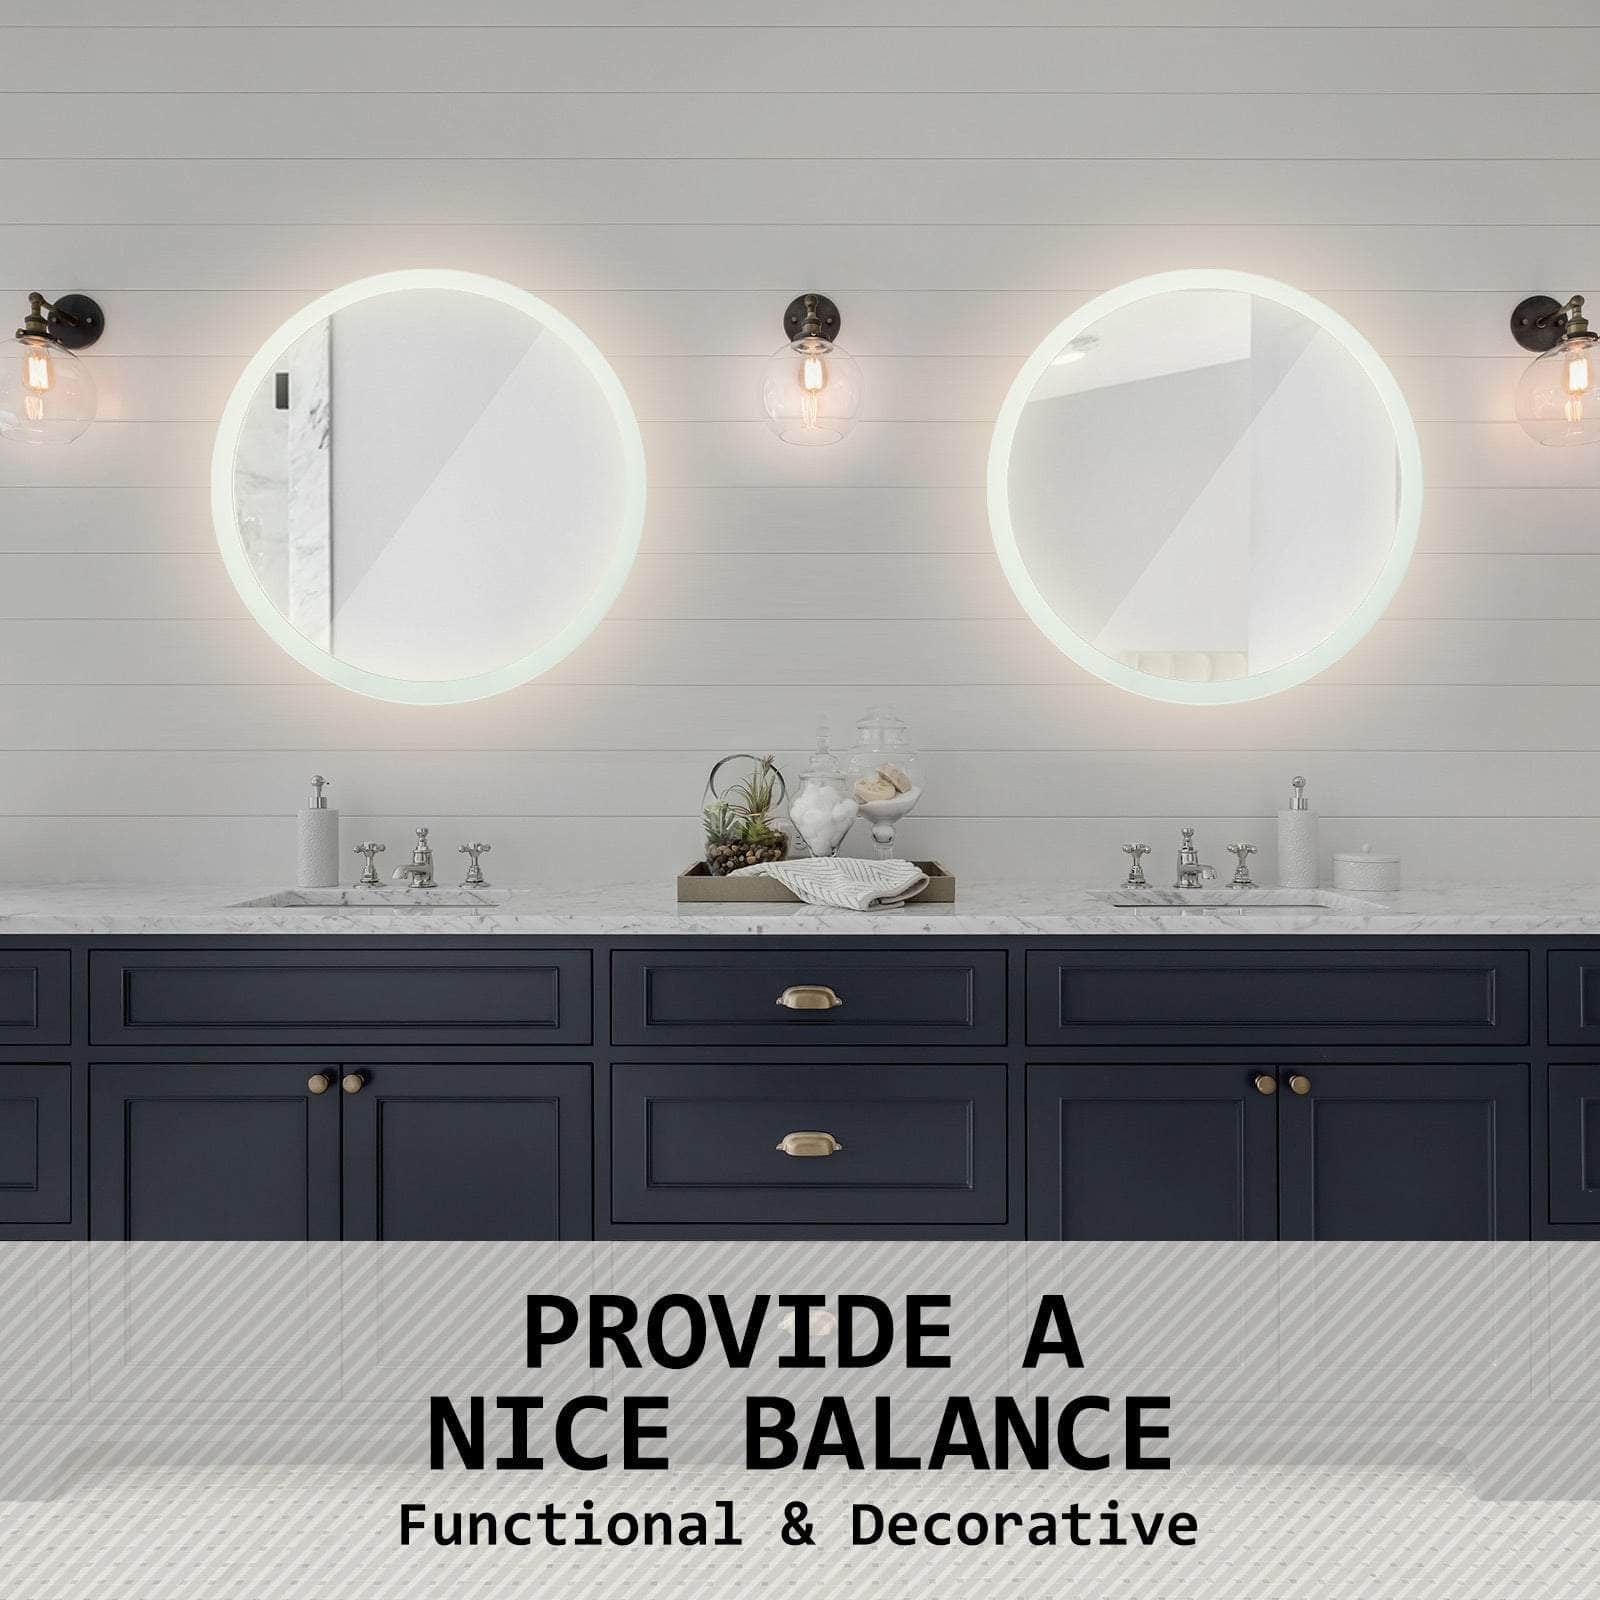 Led Wall Mirror Round Touch Anti-Fog Makeup Decor Bathroom Vanity 70Cm